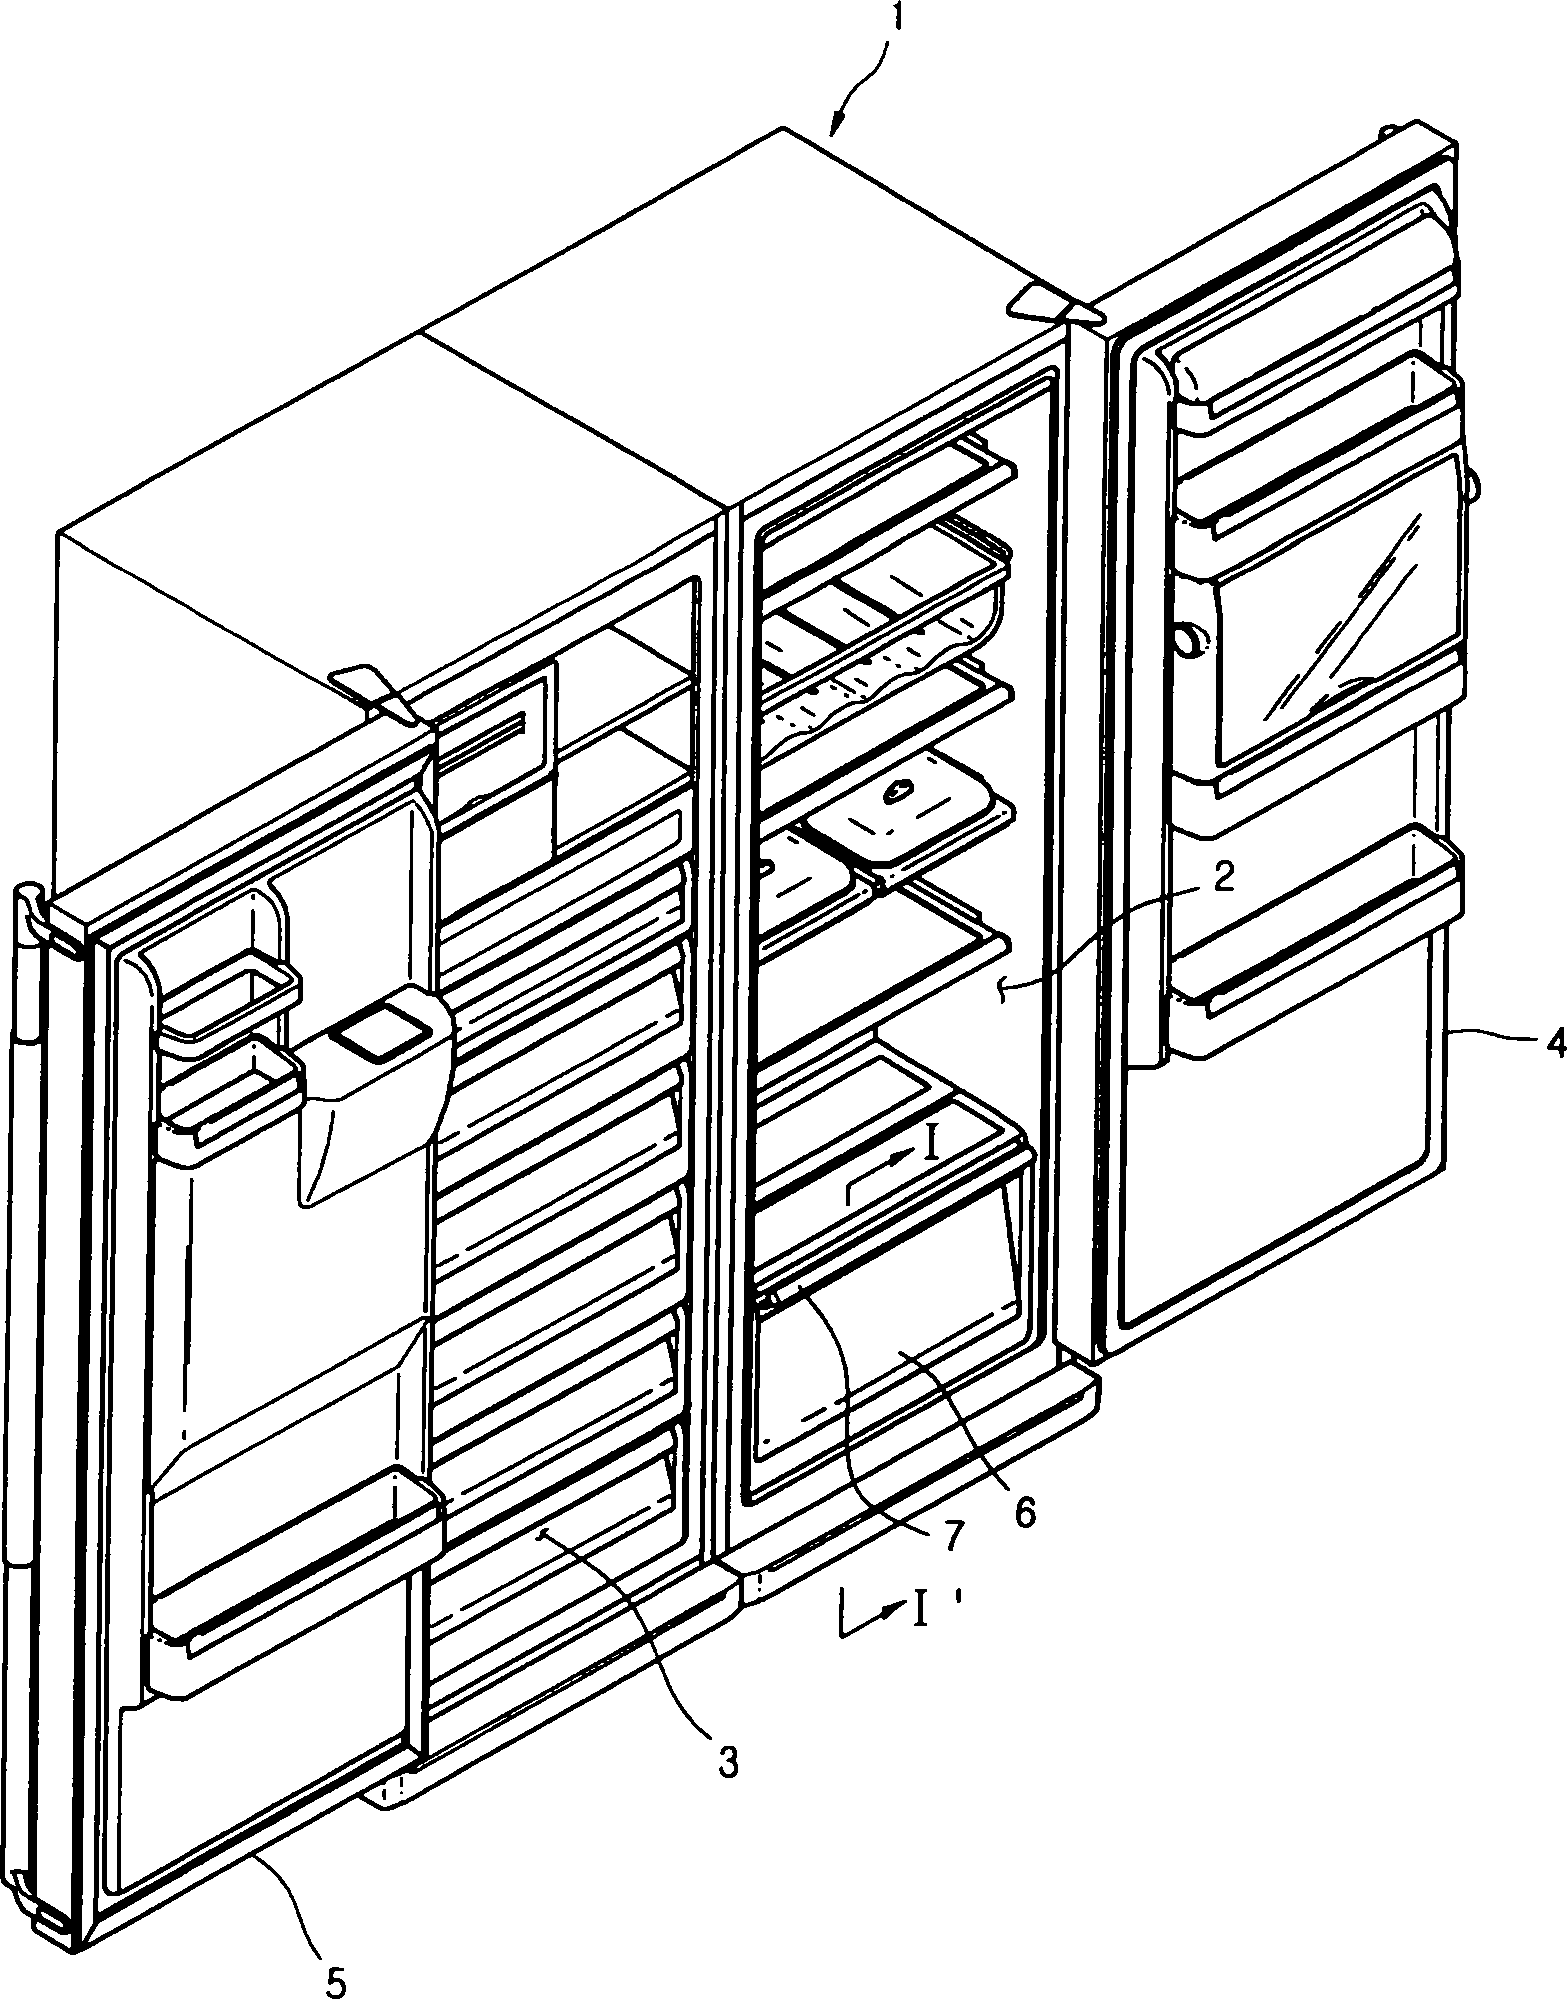 Defrosting apparatus of refrigerator